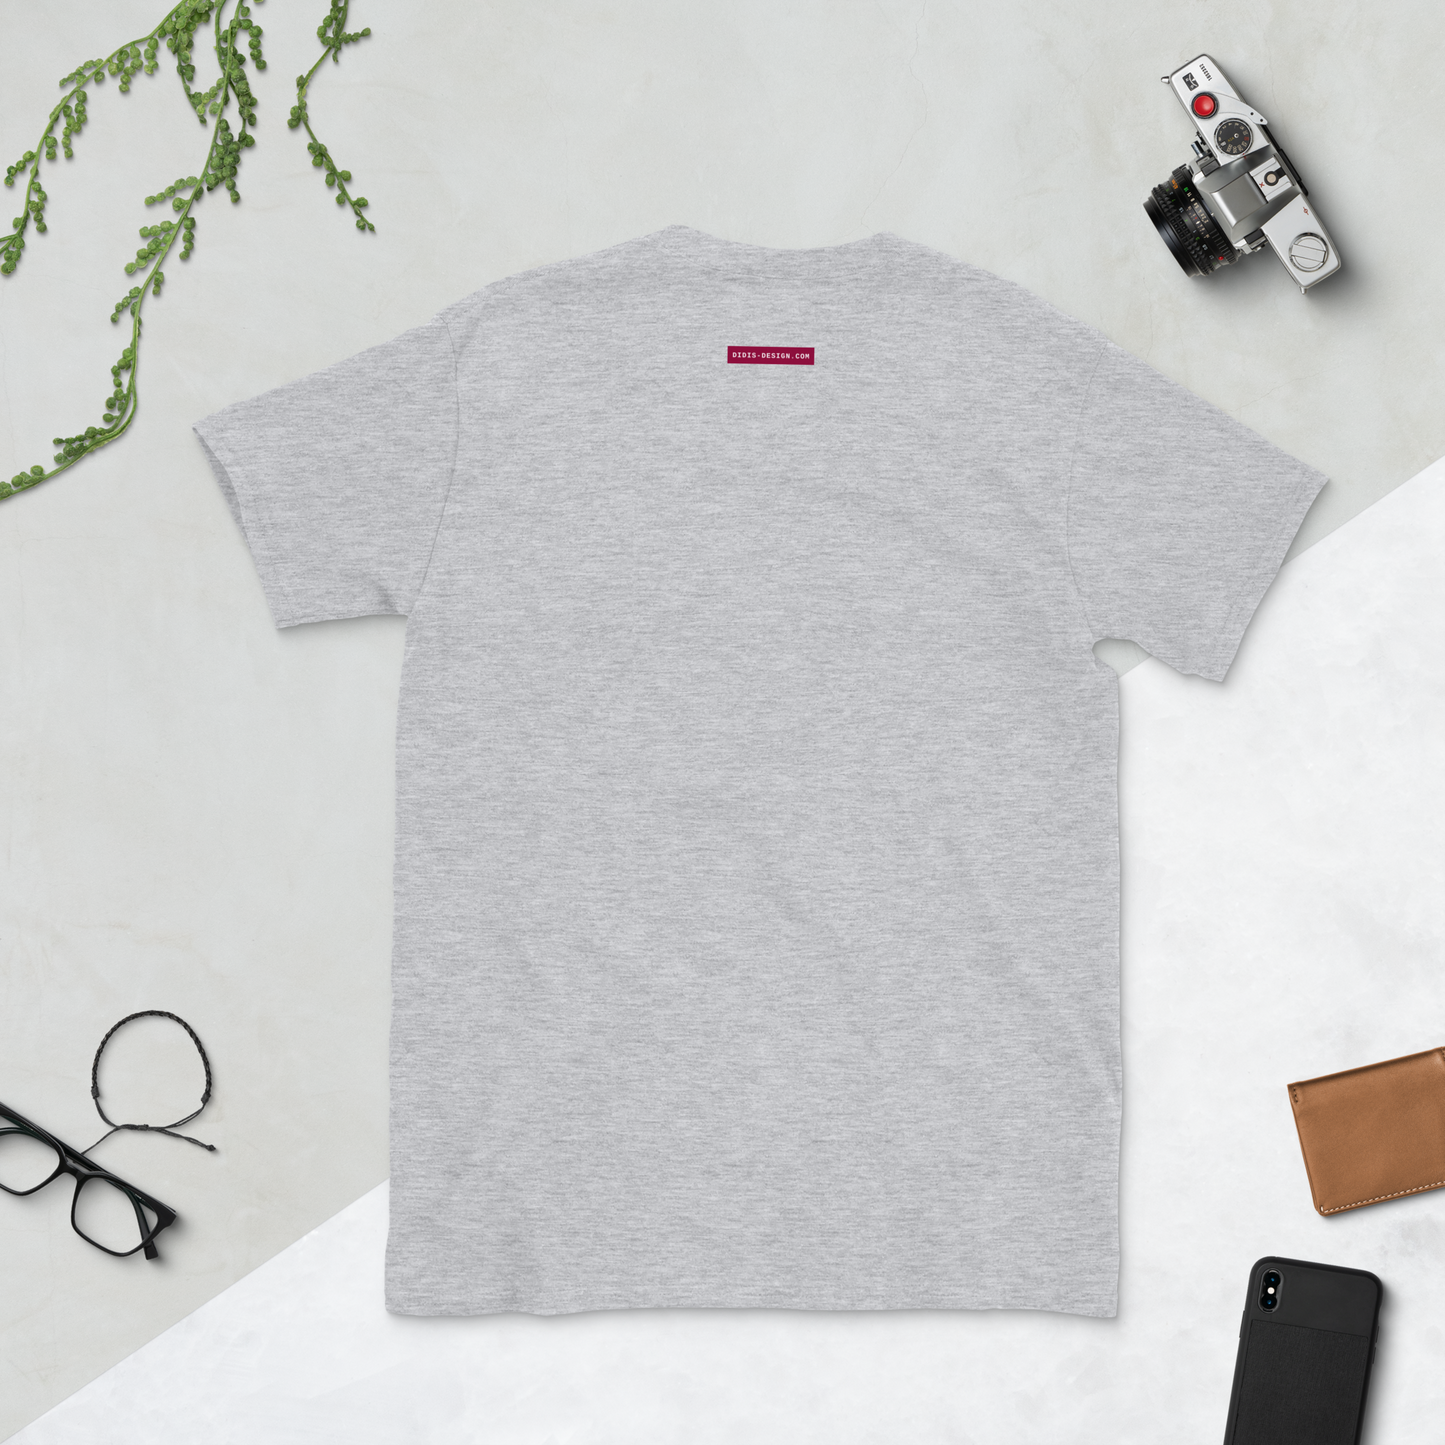 Shadow Samurai - Short-Sleeve Unisex T-Shirt